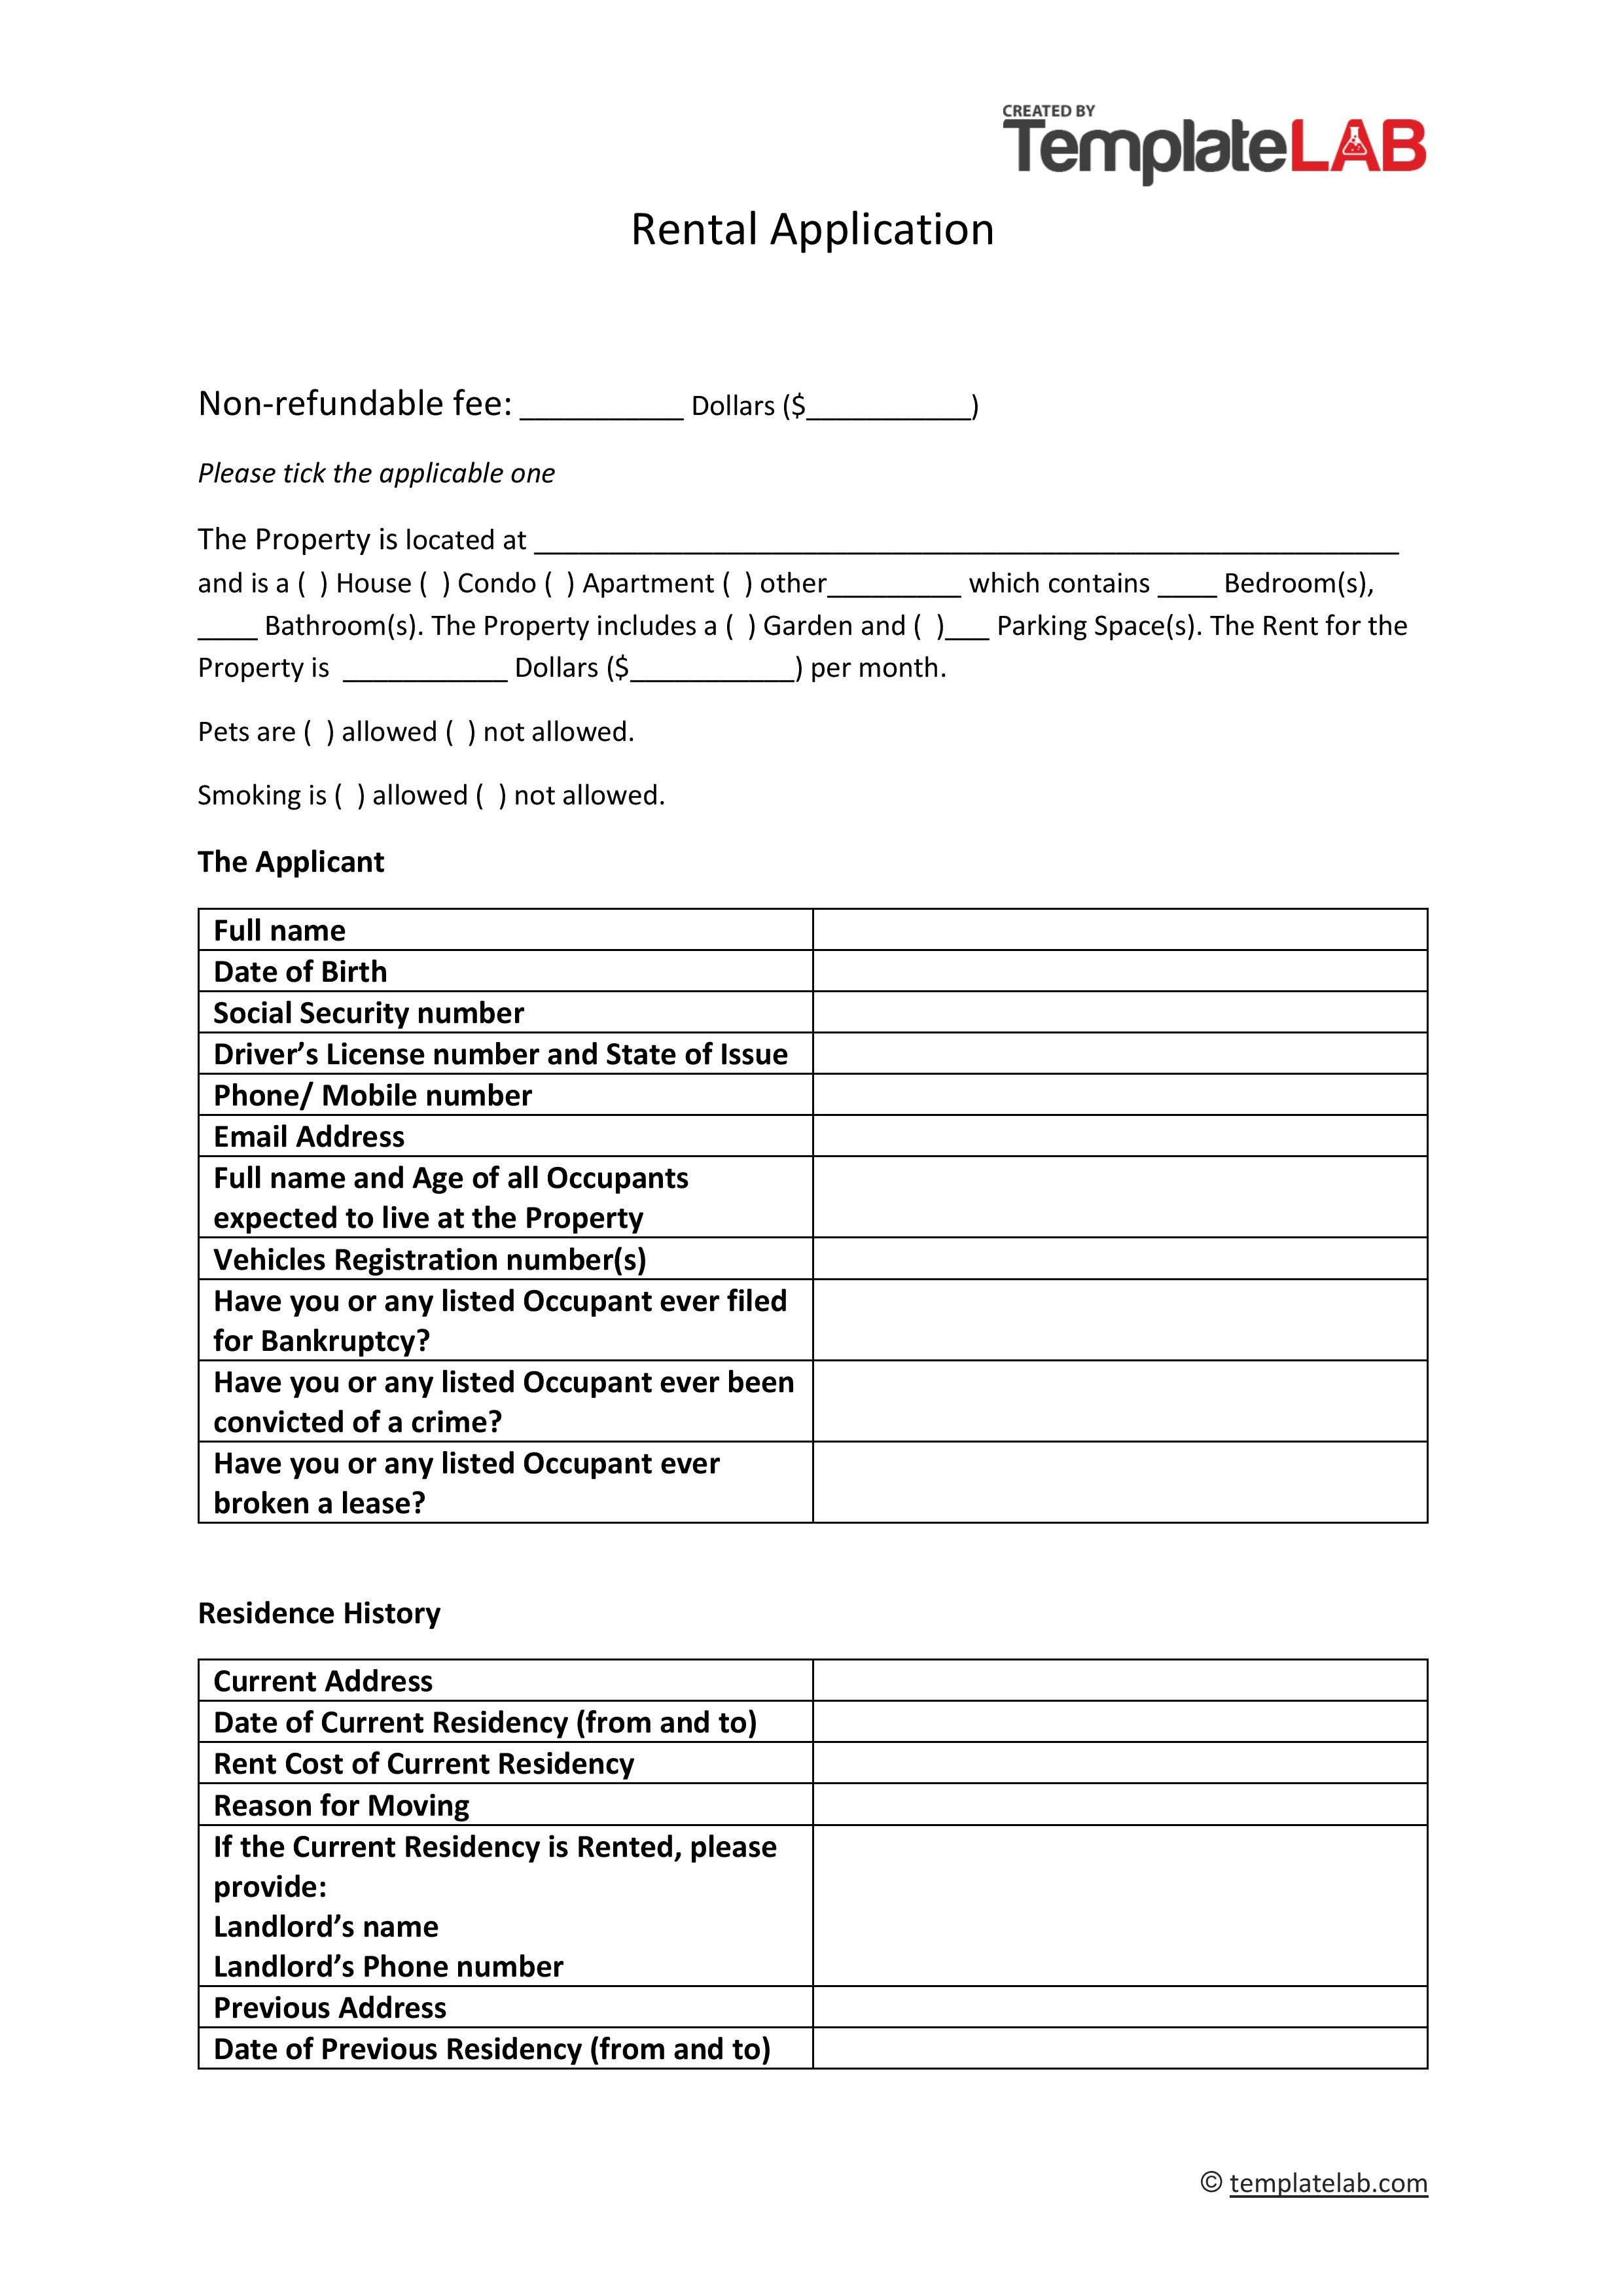 50+ Free Rental Application Templates & Forms [Word, PDF]